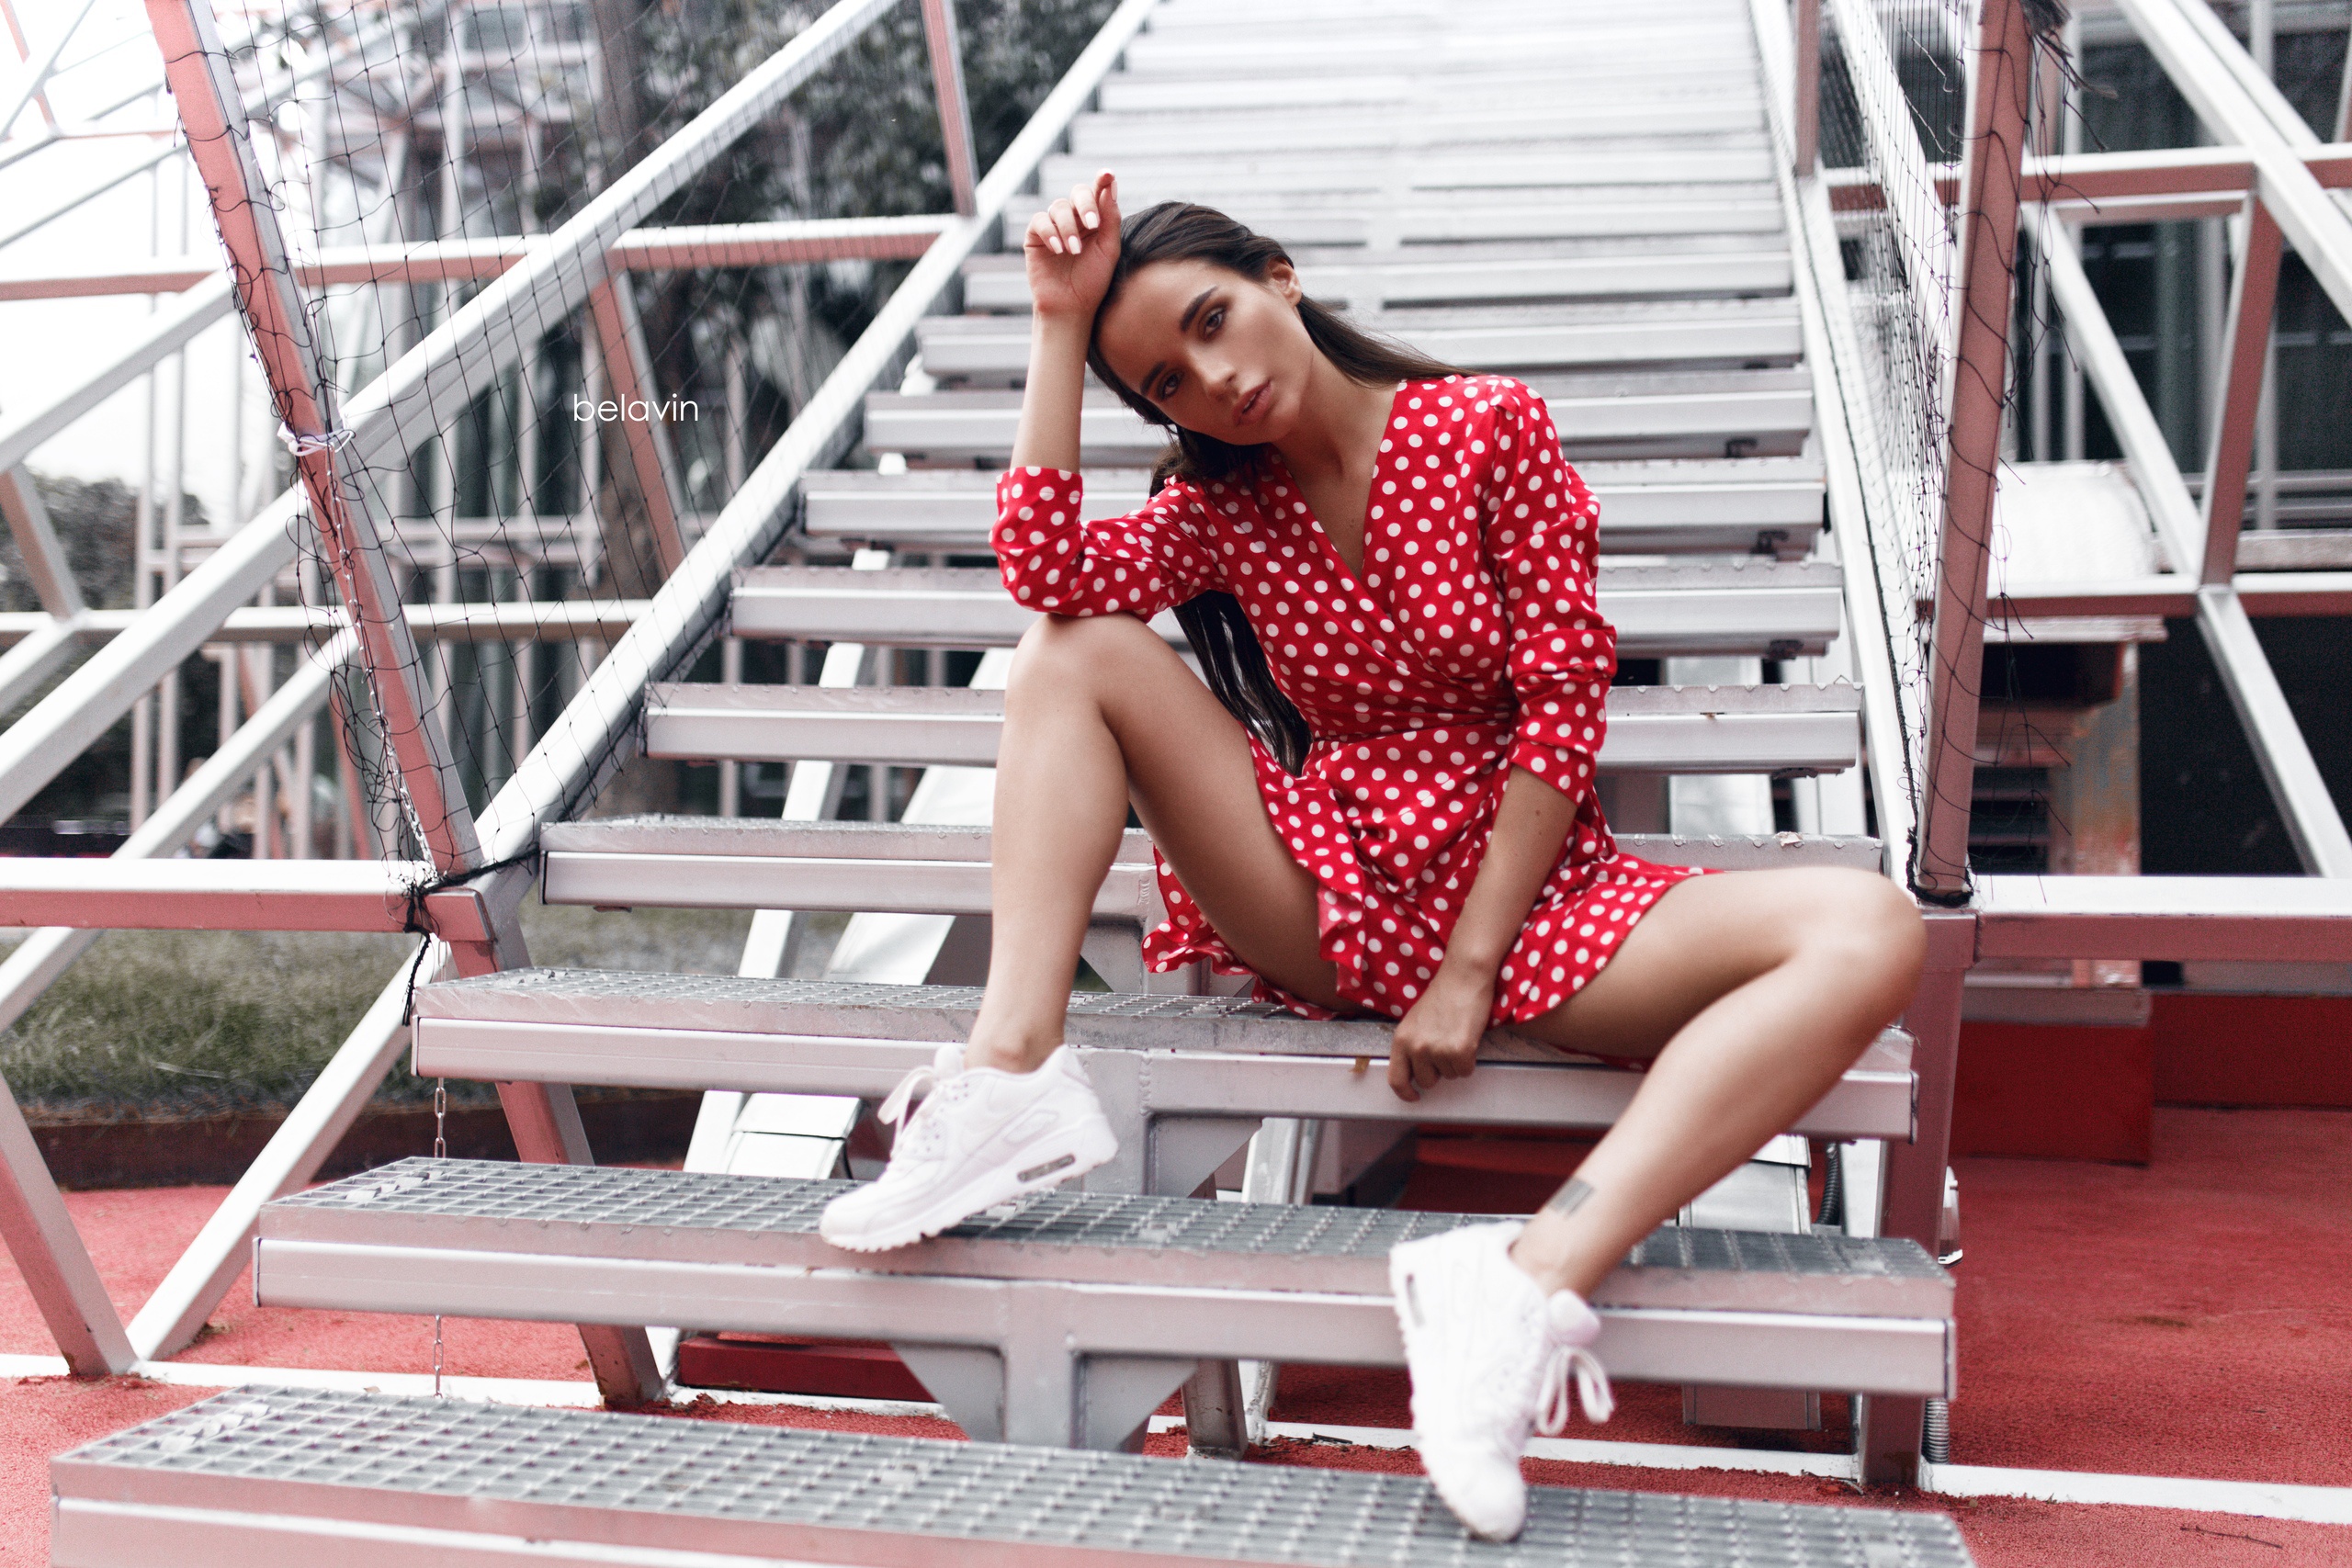 Alexander Belavin Women Stairs Urban Sitting Women Outdoors Polka Dots Sneakers Red Dress Brunette L 2560x1707